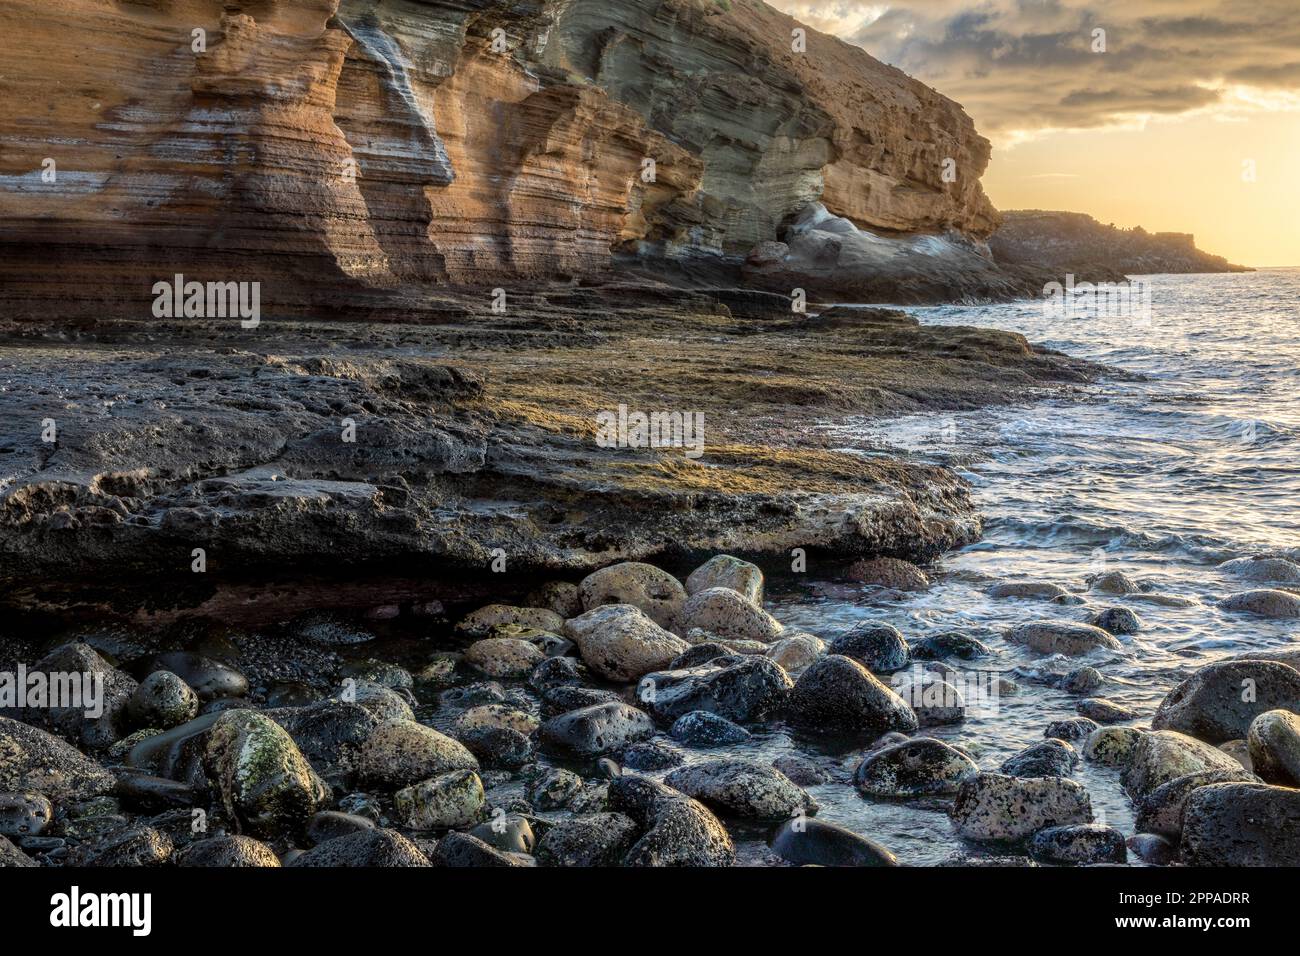 Rock formations in morning light at Costa del Silencio, Tenerife, Spain Stock Photo